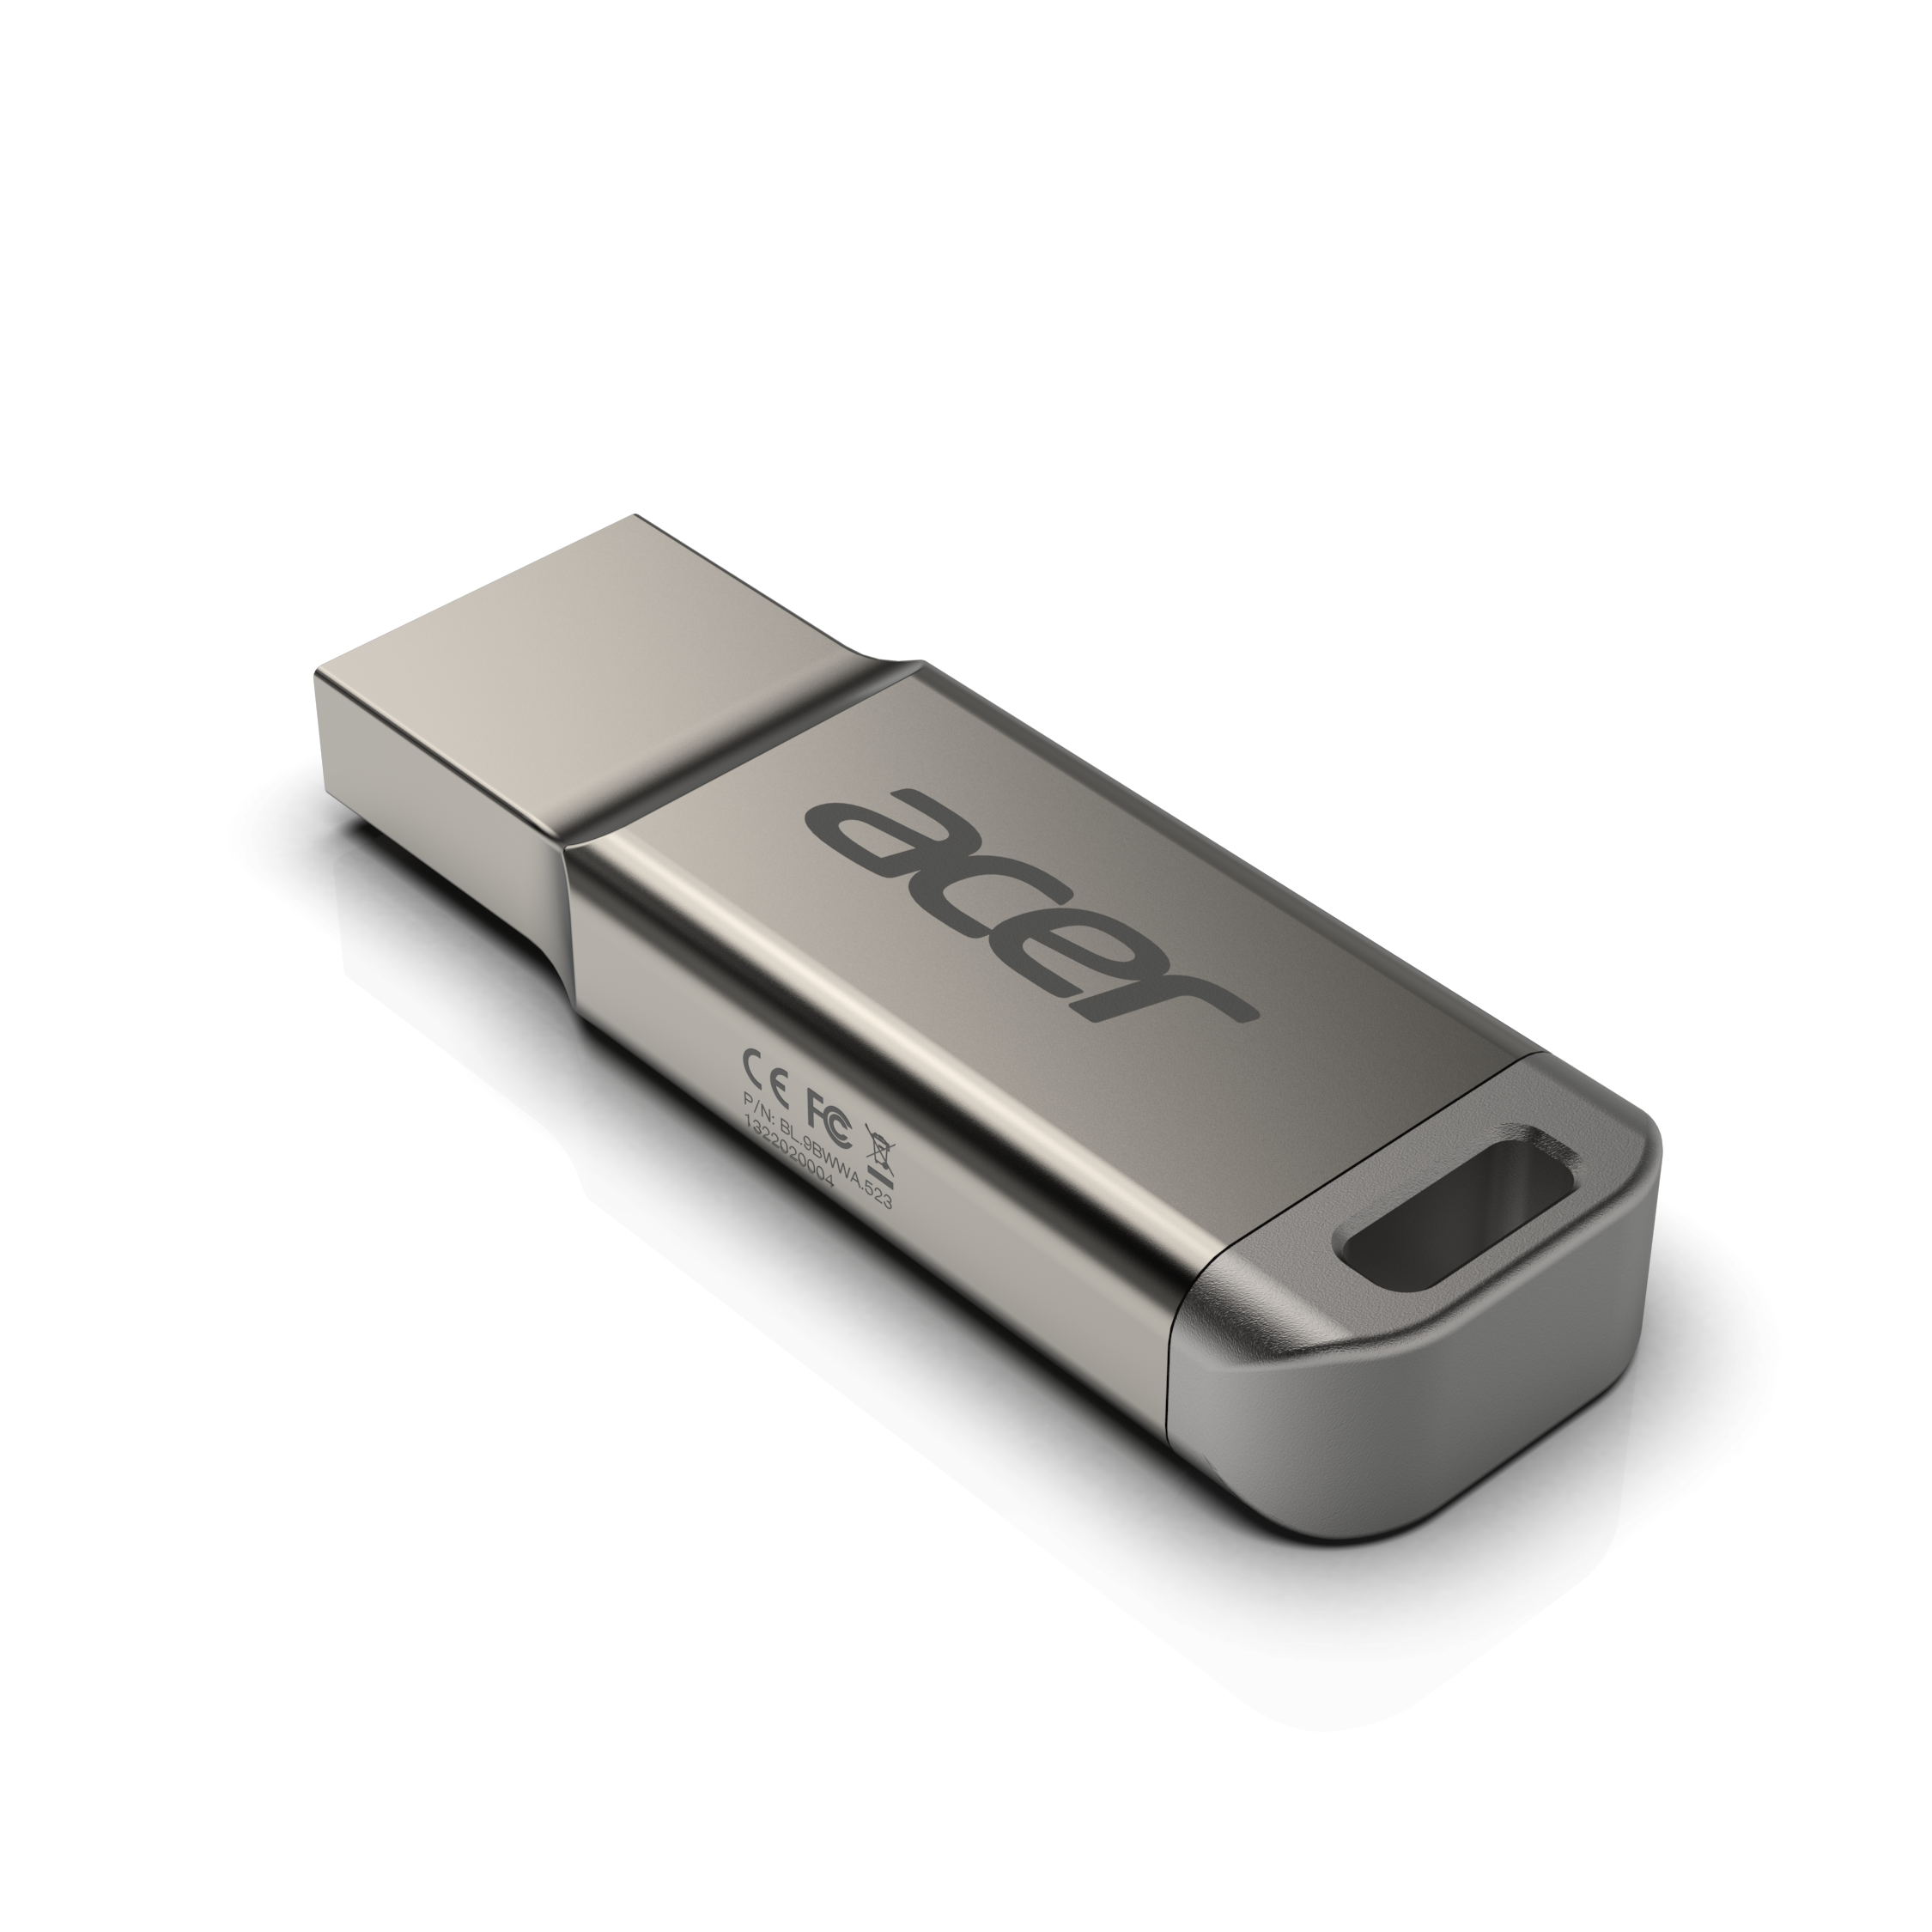 Acer UM310 USB Flash Drive